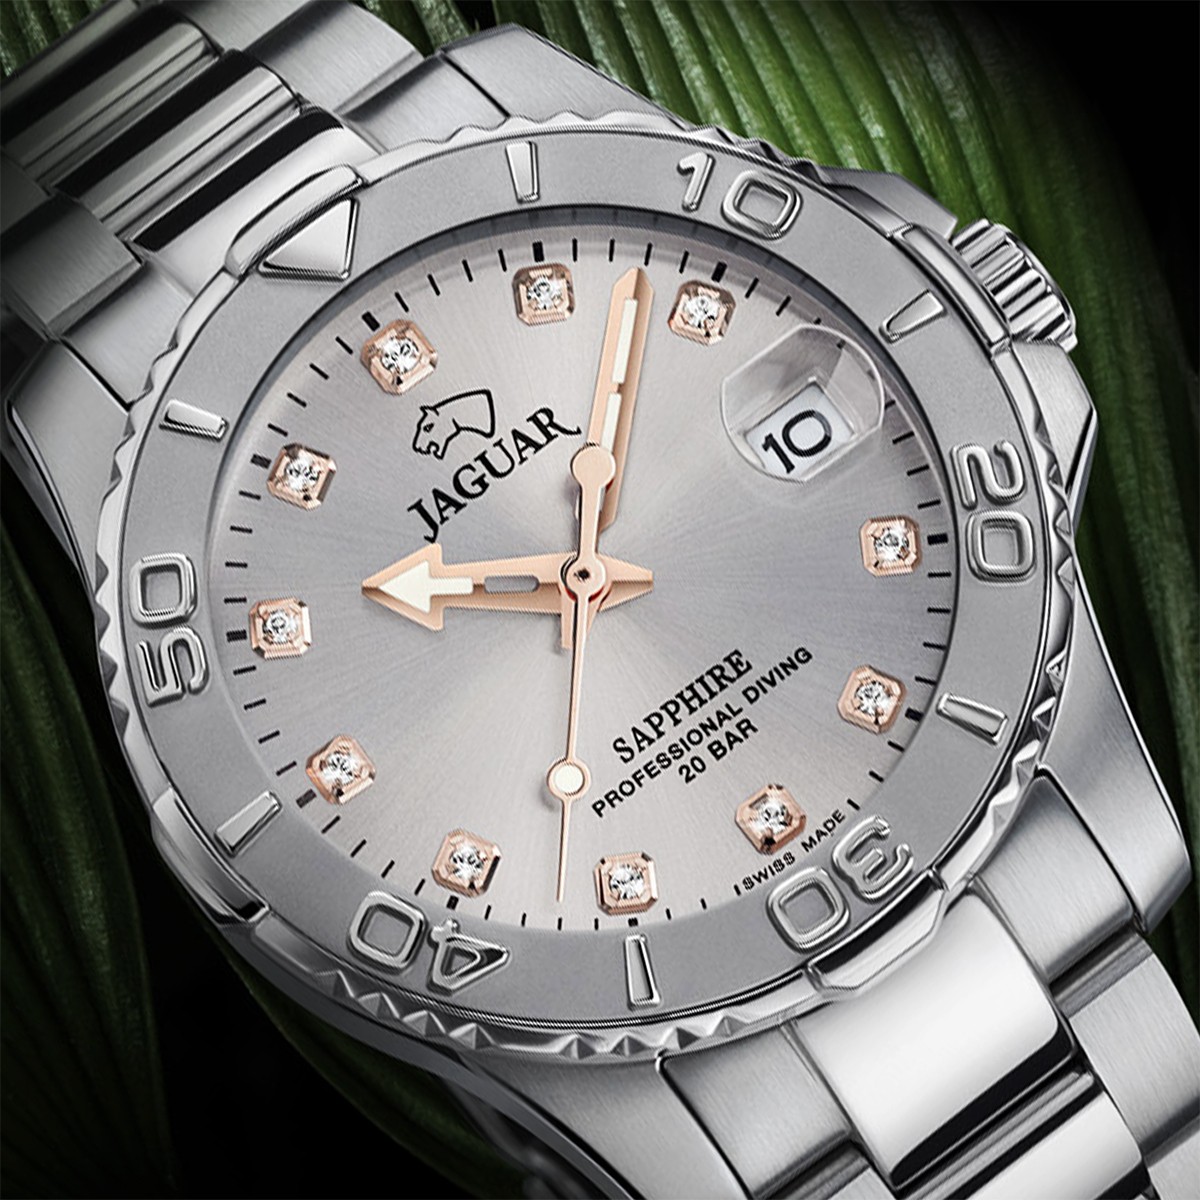 JAGUAR  Женские швейцарские часы, кварцевый механизм, сталь, 34 мм